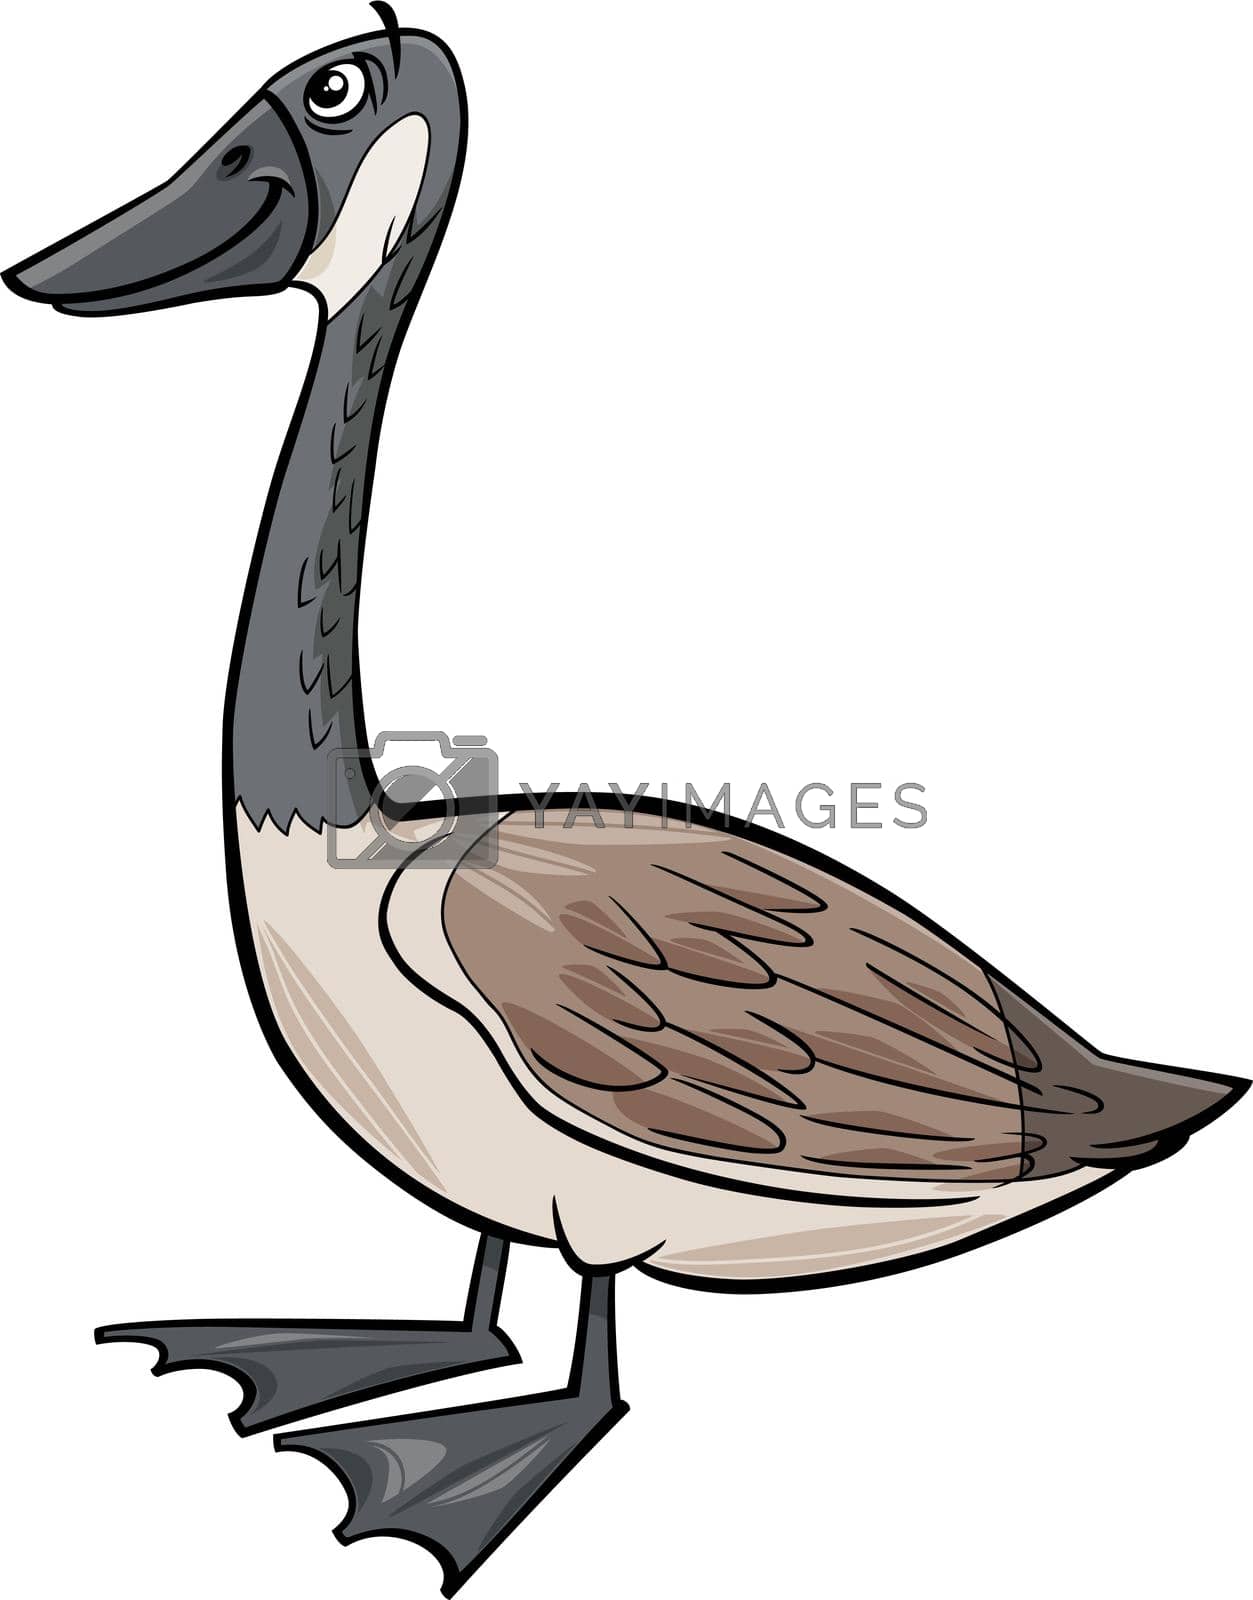 Royalty free image of wild goose bird animal character cartoon illustration by izakowski